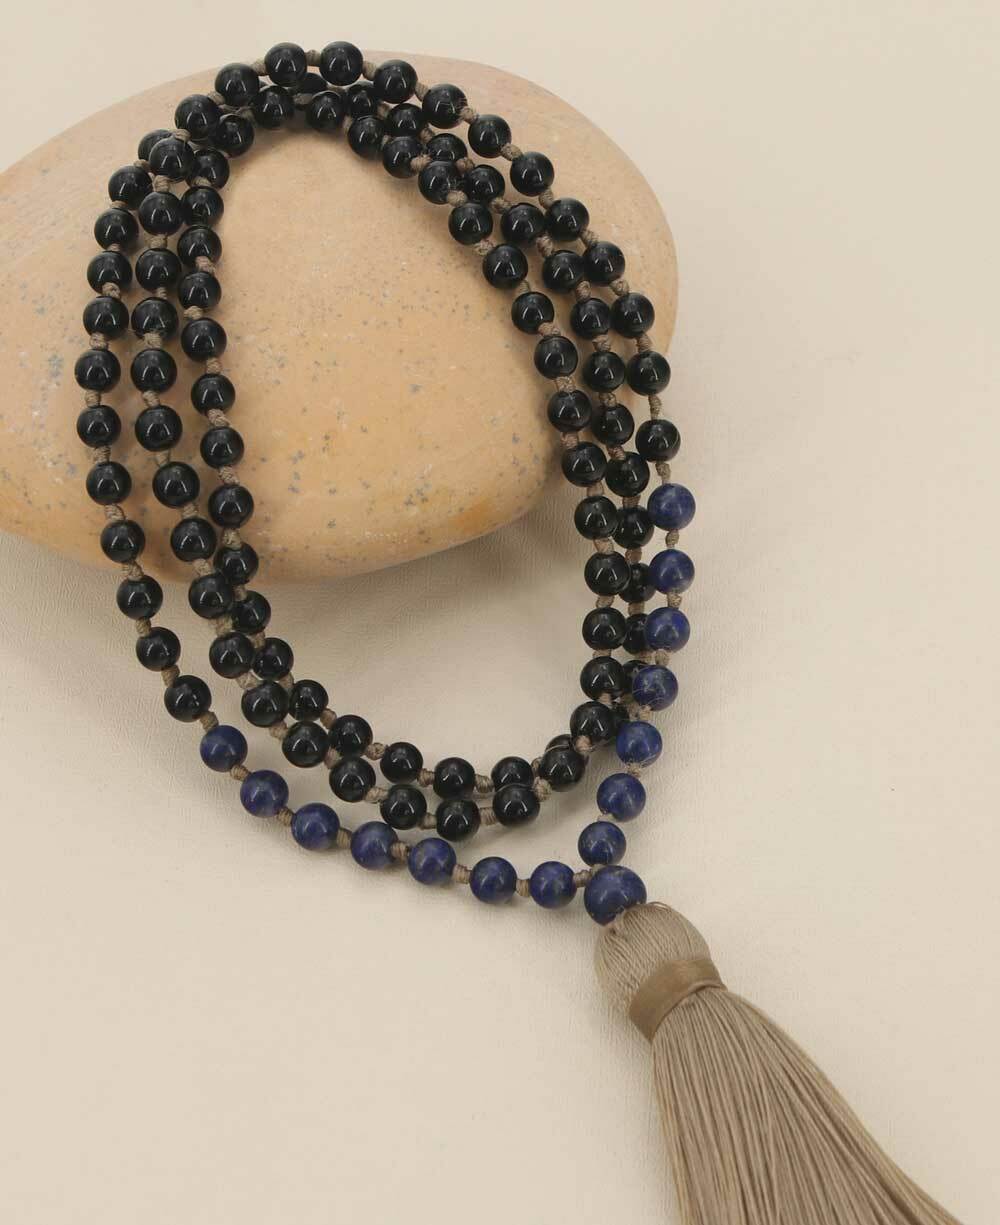 Black Onyx and Lapis Meditation Mala, Knotted 108 Beads - Prayer Beads 6mm